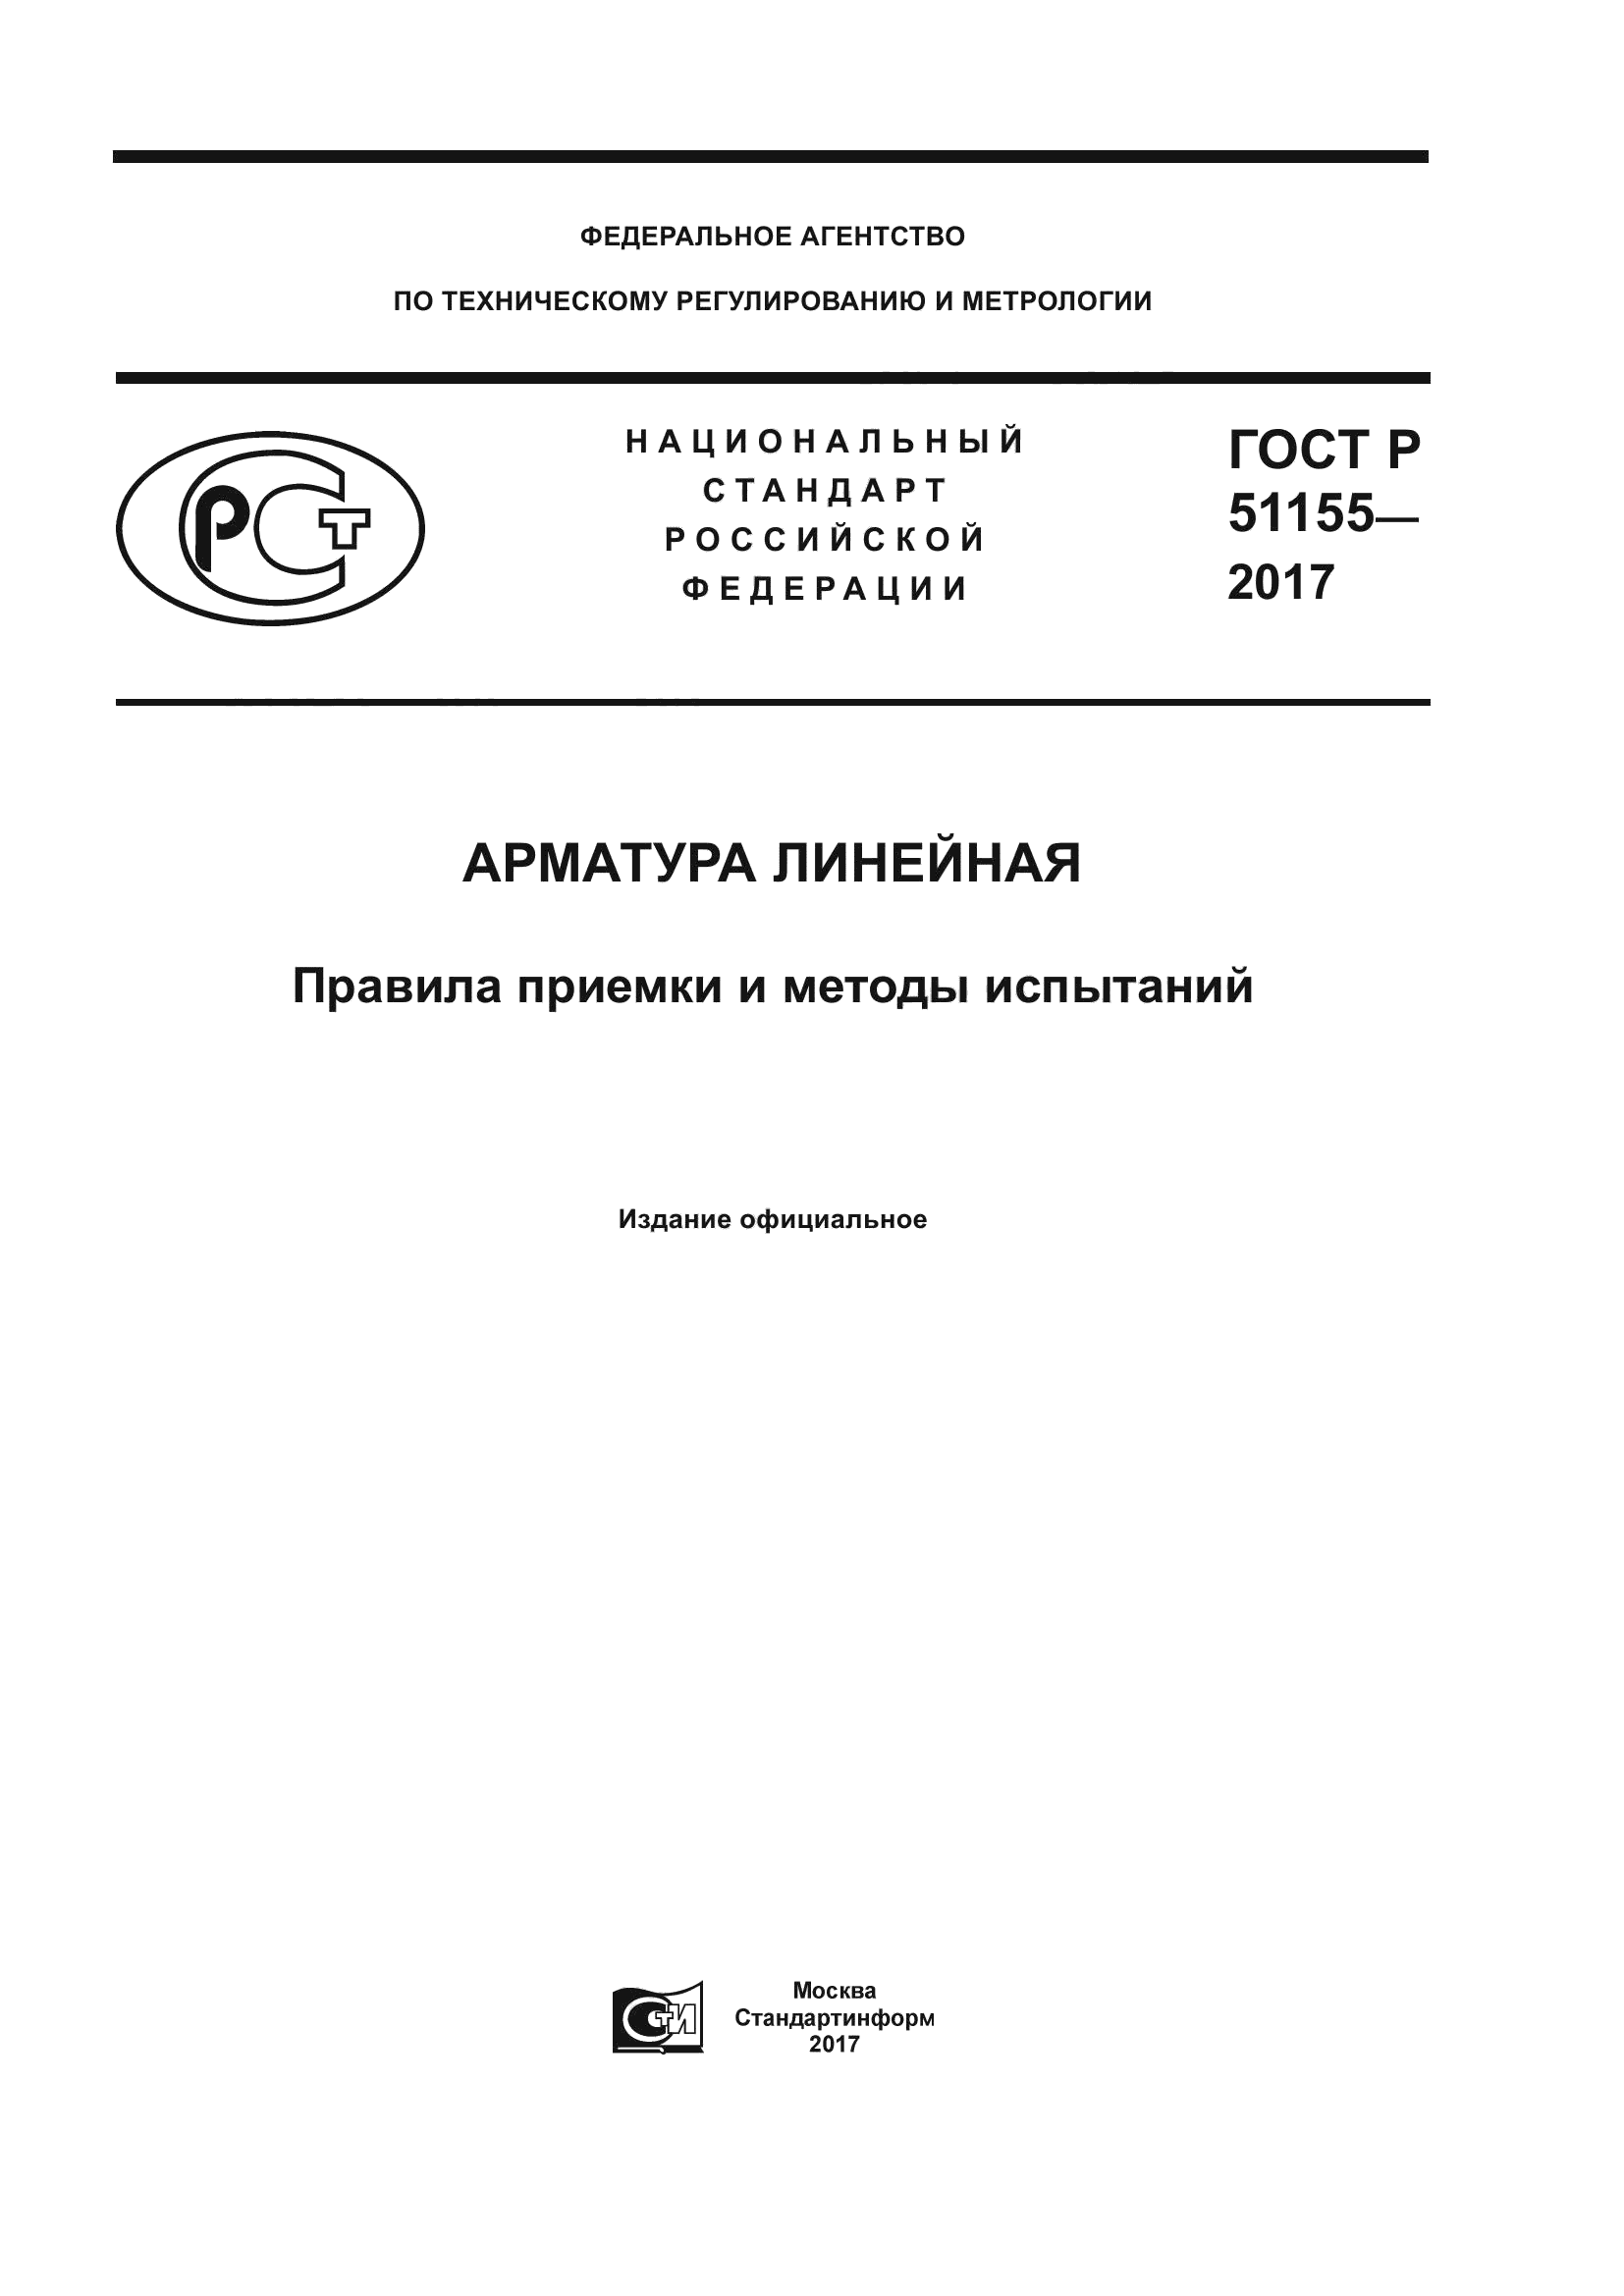 ГОСТ Р 51155-2017